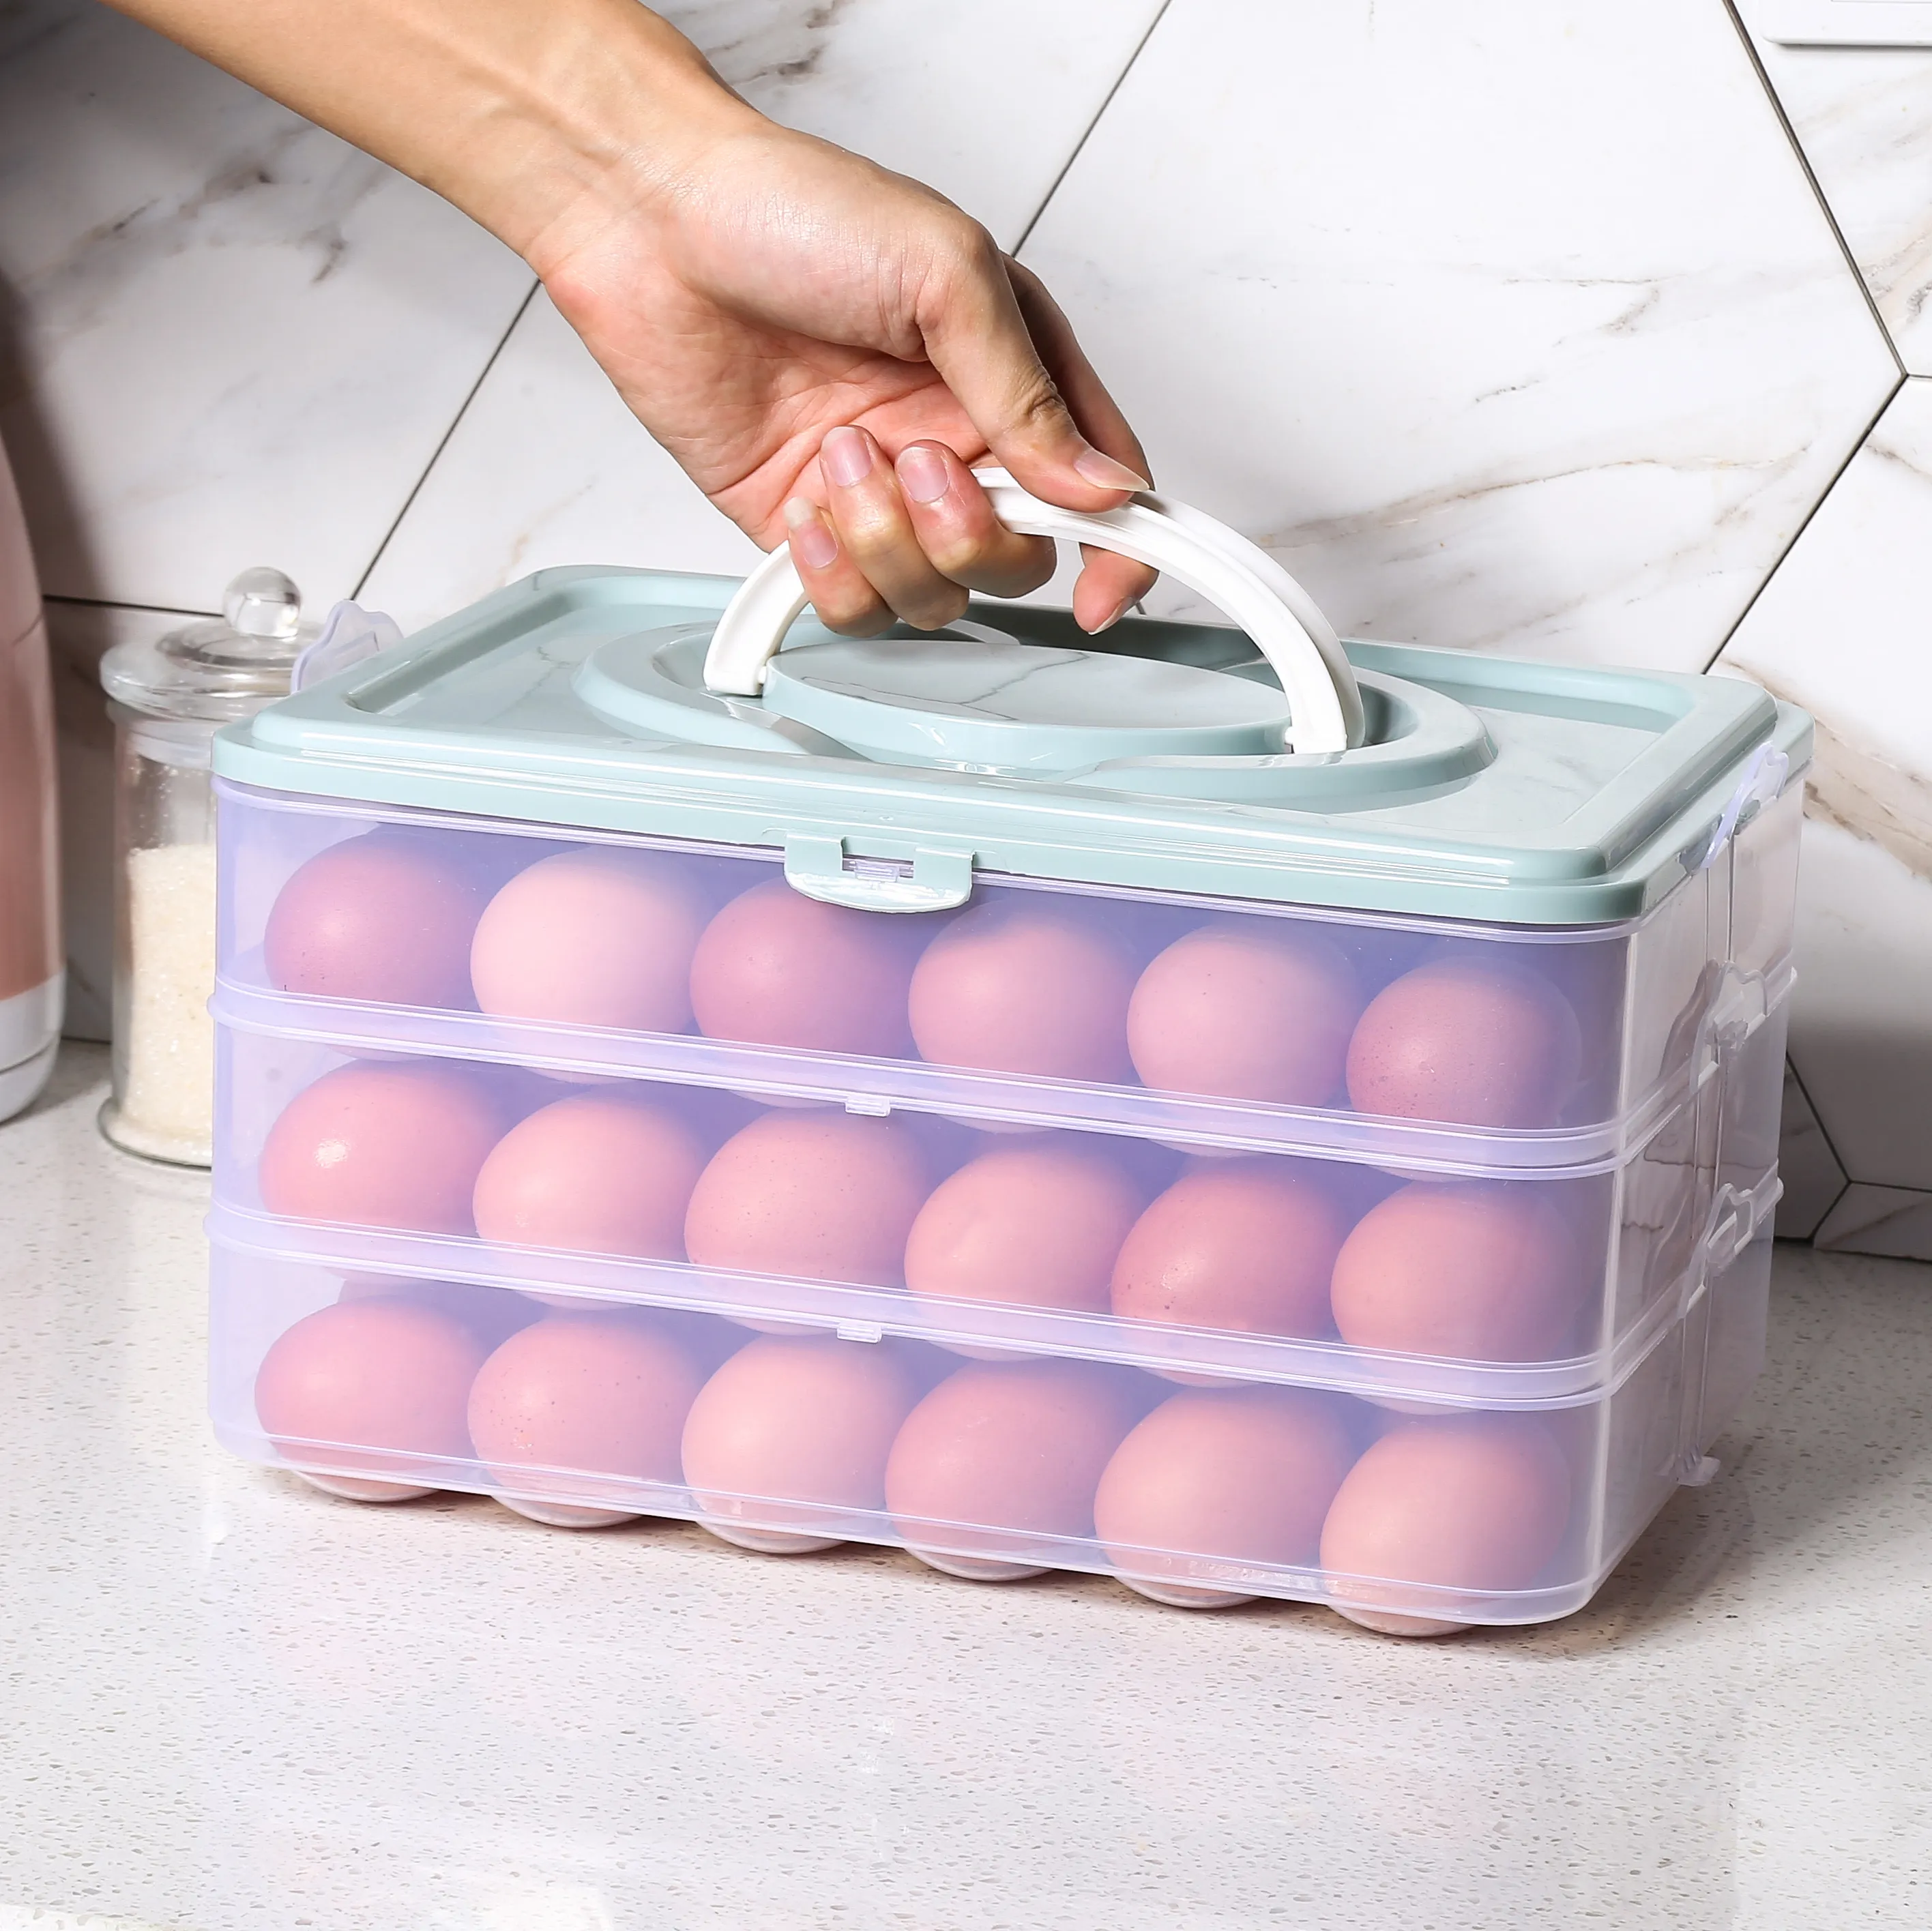 3-camada Grande Capacidade De Plástico Transparente Recipiente De Armazenamento Titular Caixa De Armazenamento de Ovos Frescos para Geladeira